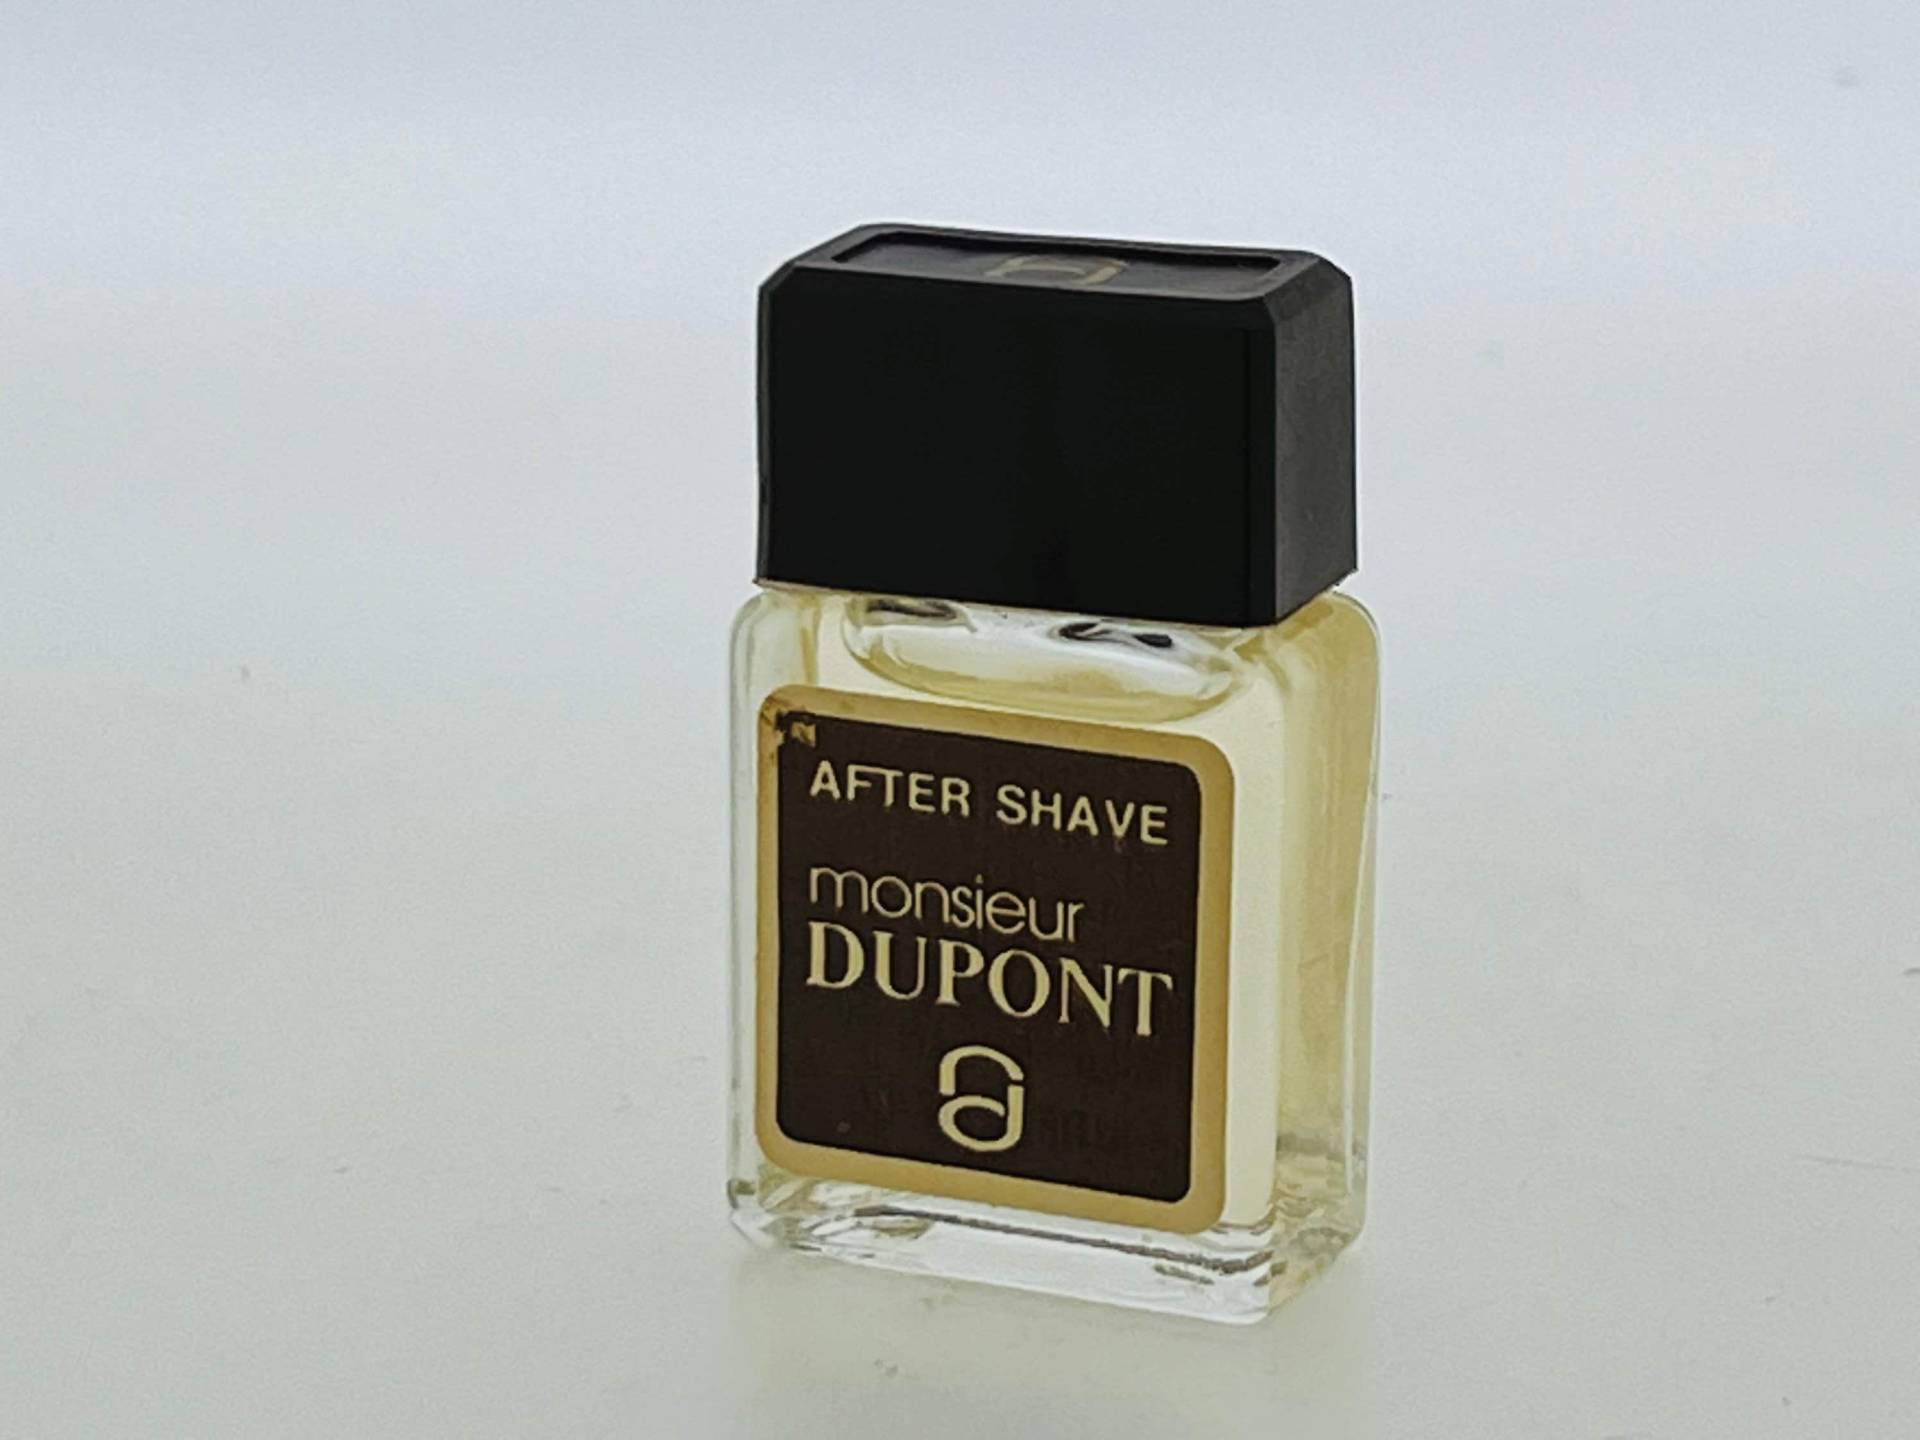 Monsieur Dupont, Richard Dupont 1972 After Shave Miniatur 5 Ml von Etsy - VintagGlamour